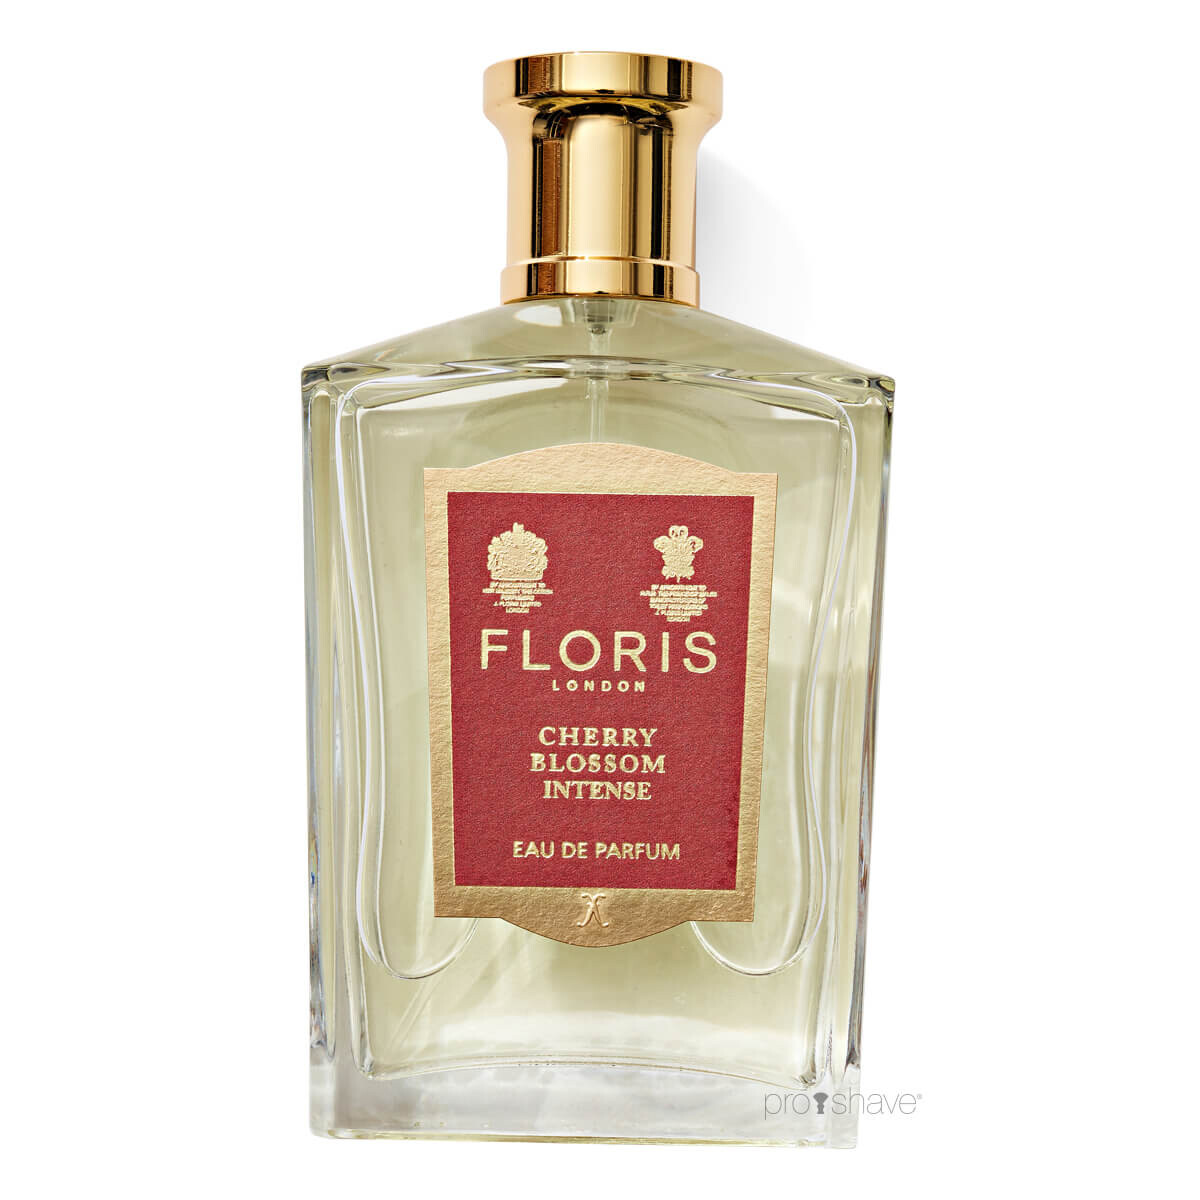 Billede af Floris Cherry Blossom Intense, Eau de Parfum, 100 ml.